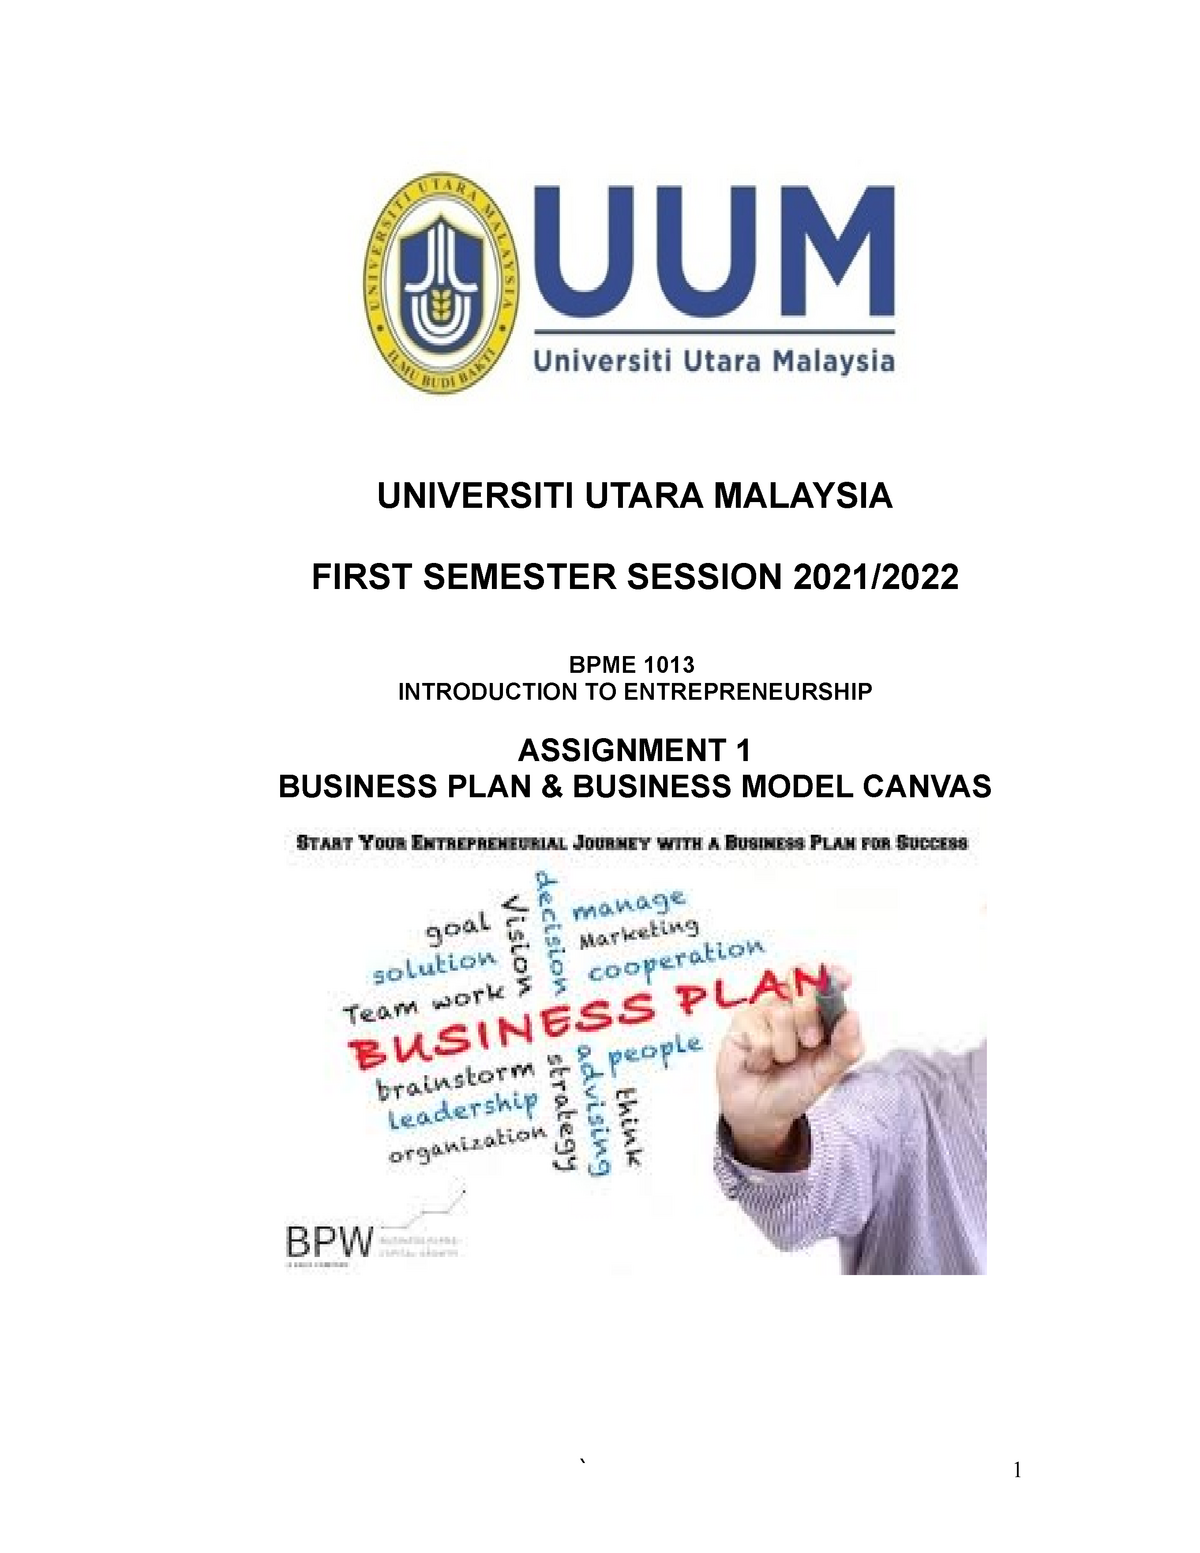 Assignment 1-Business Plan - UNIVERSITI UTARA MALAYSIA FIRST SEMESTER